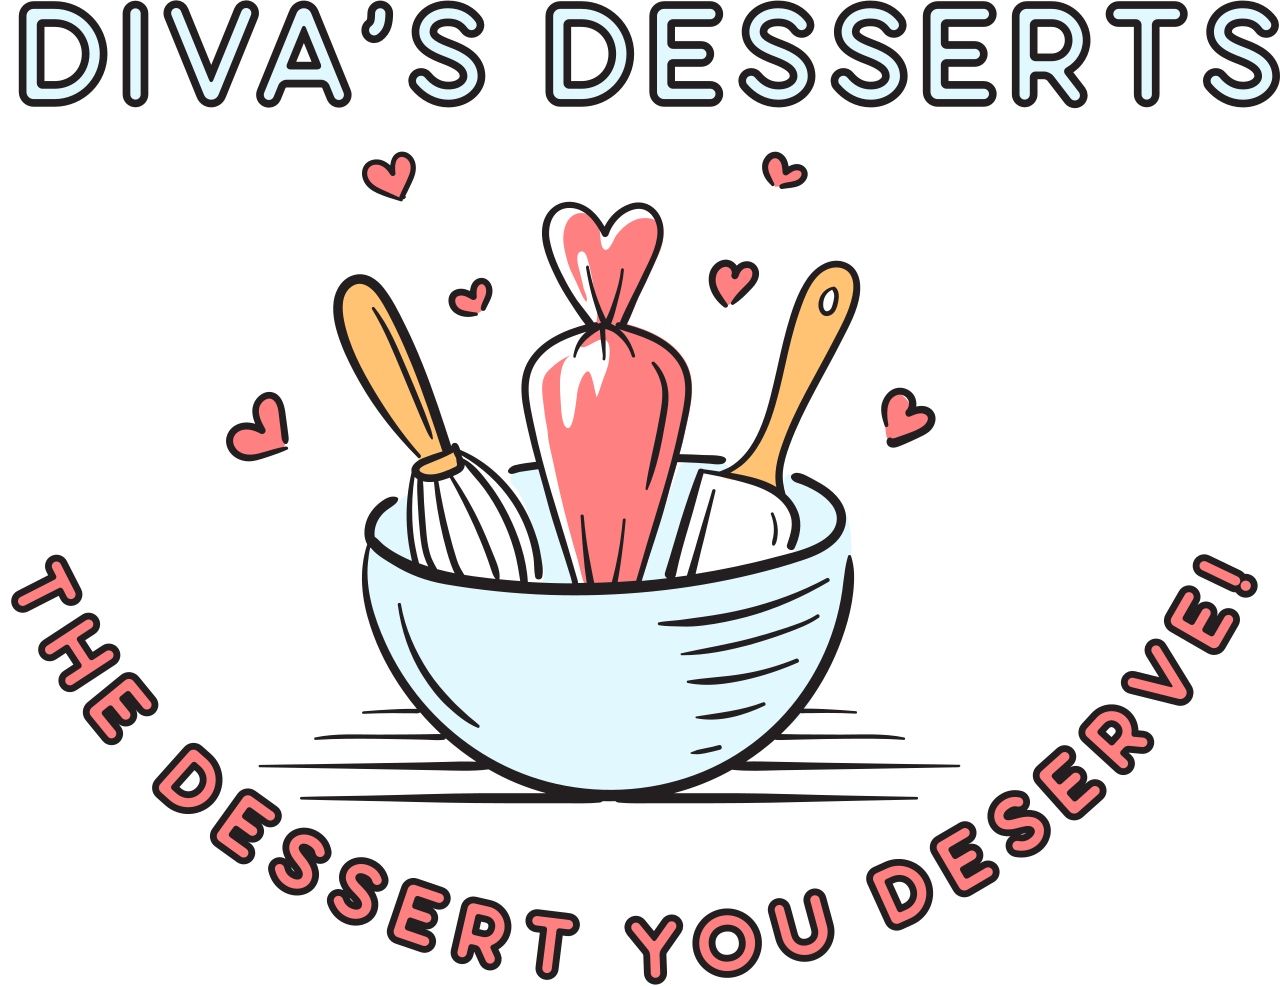 Diva's desserts's logo